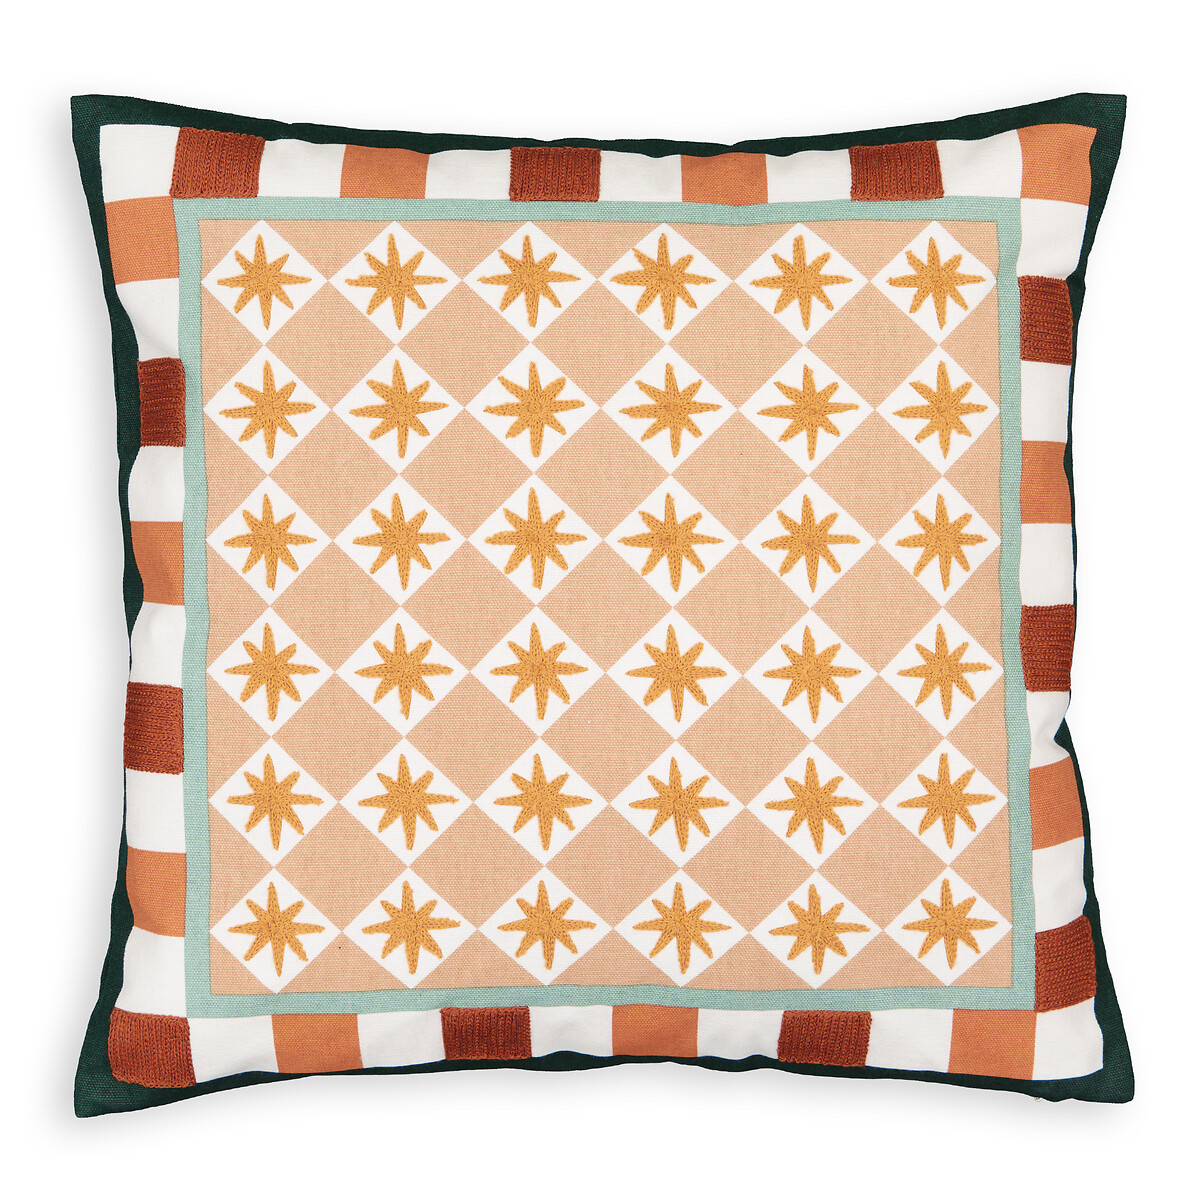 Silandro Colourful Tiled 100% Cotton Cushion Cover